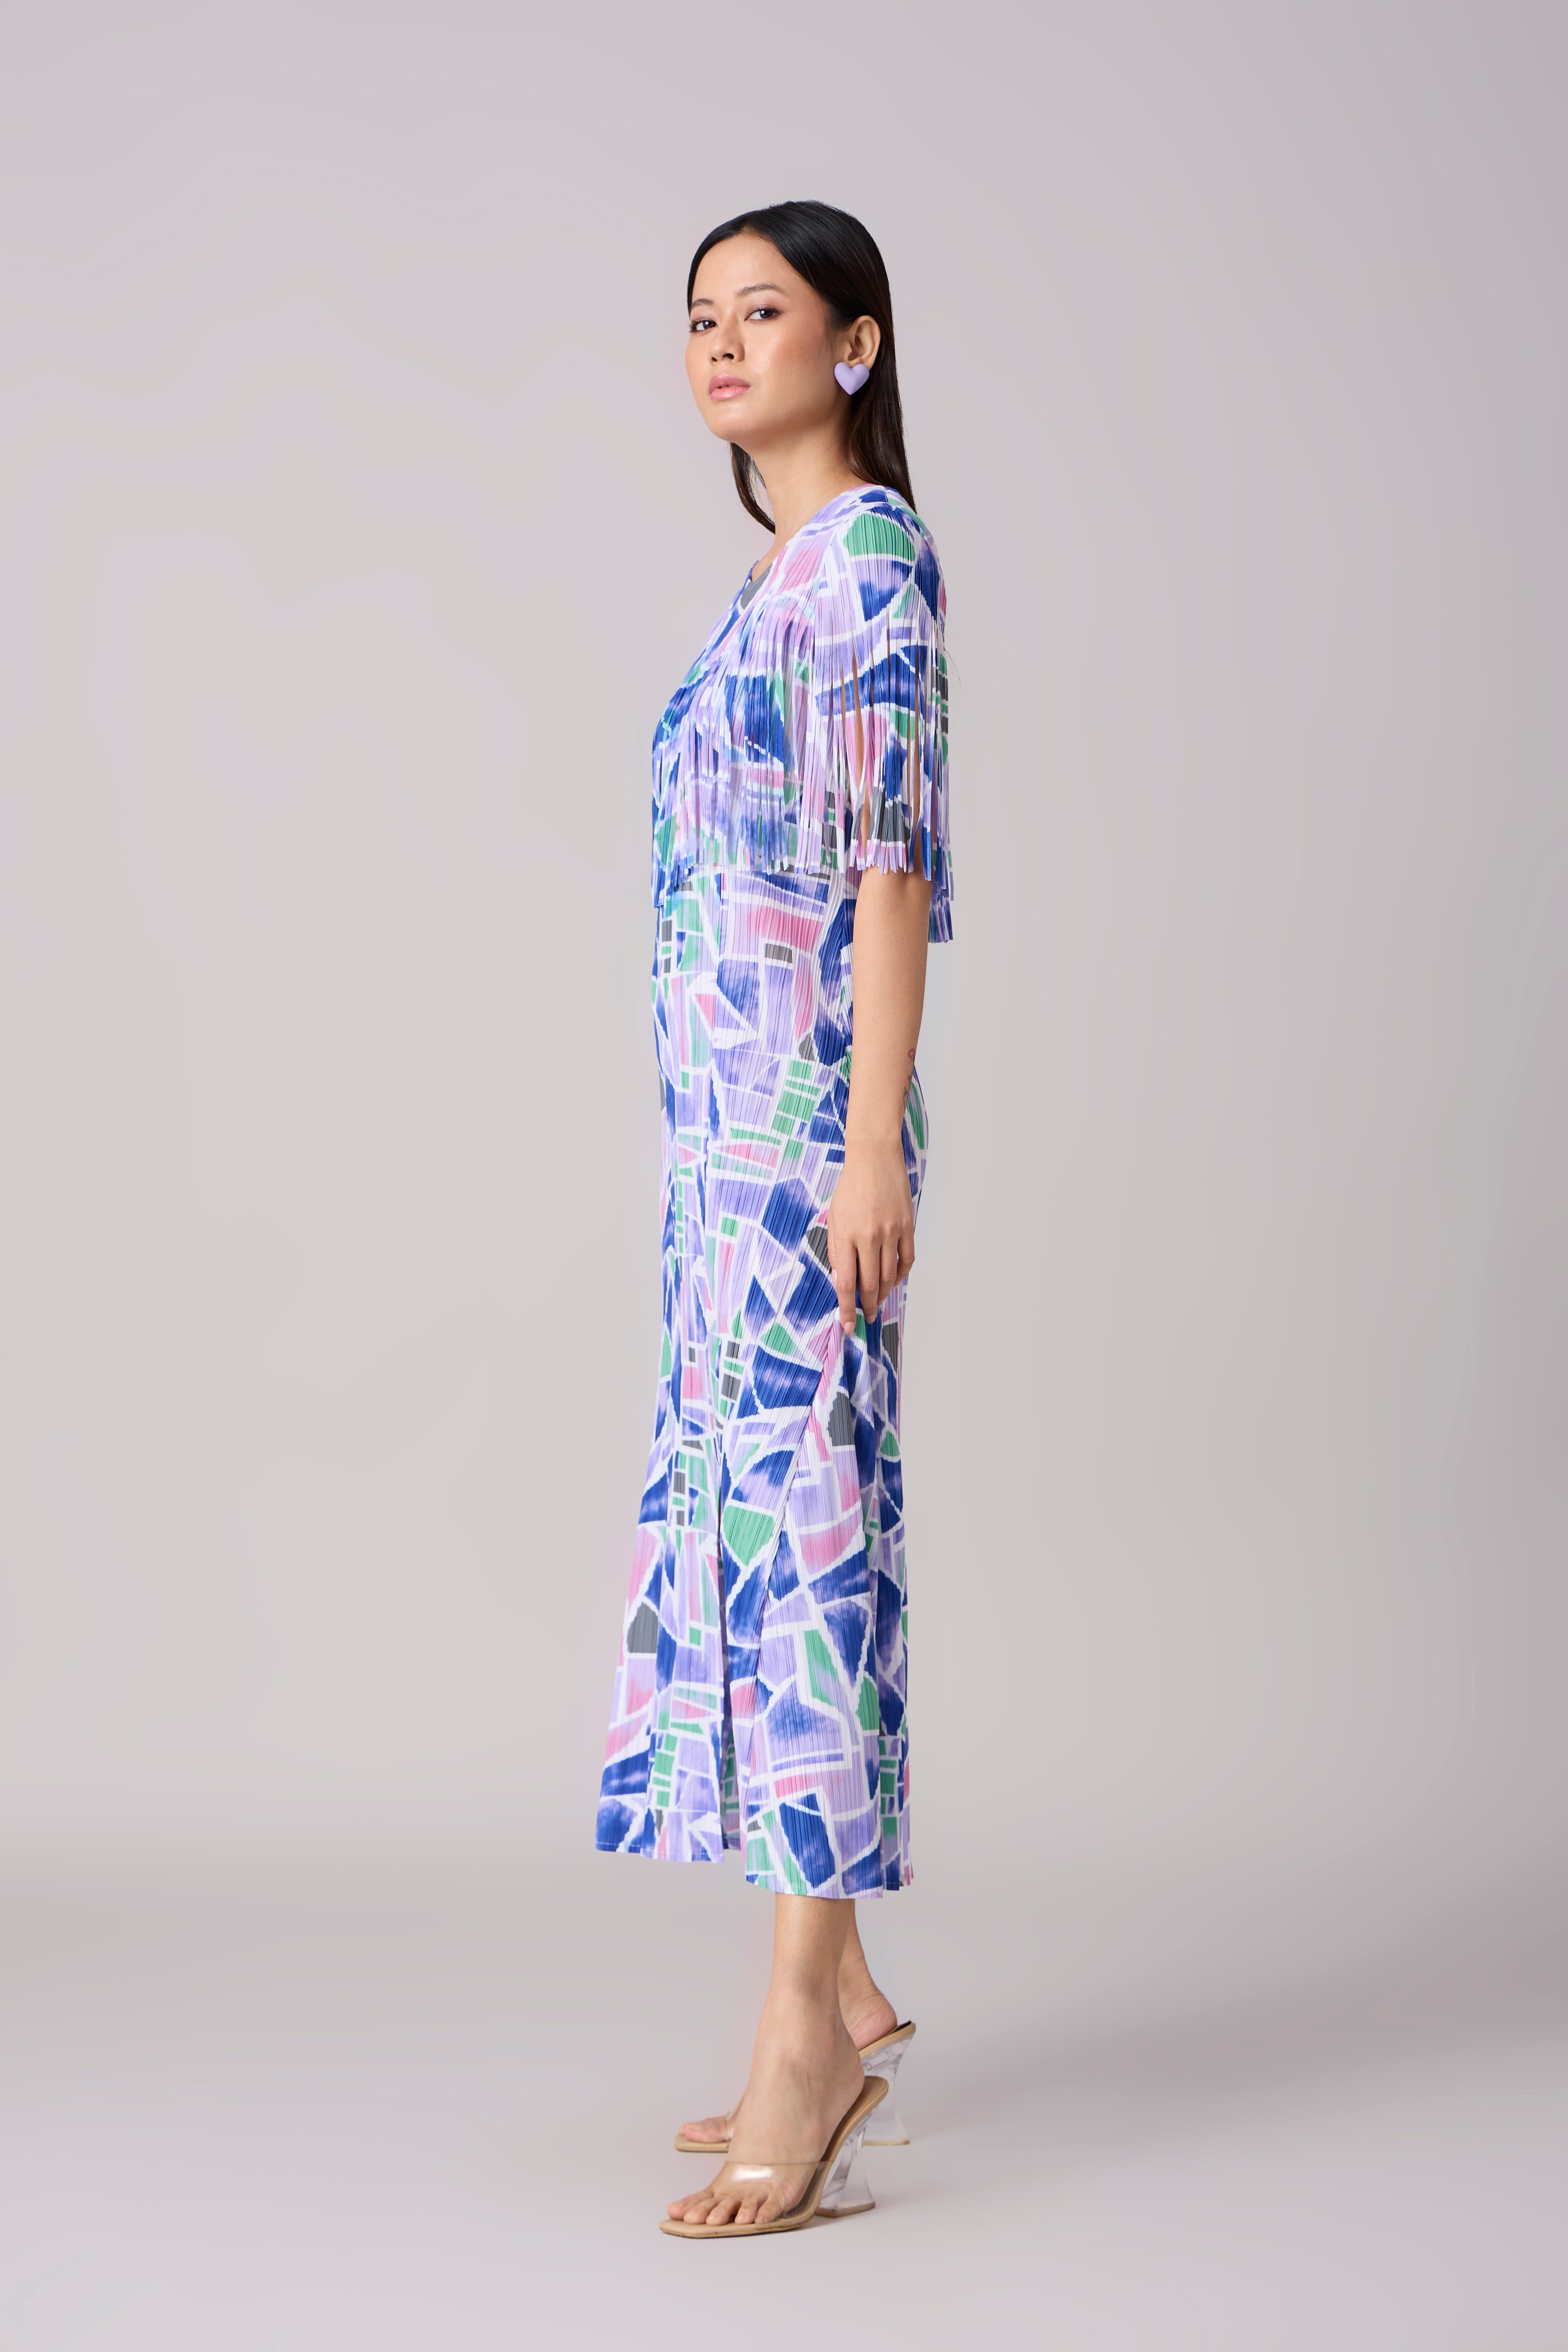 Alisha Geometry Dress - Lavender Blue